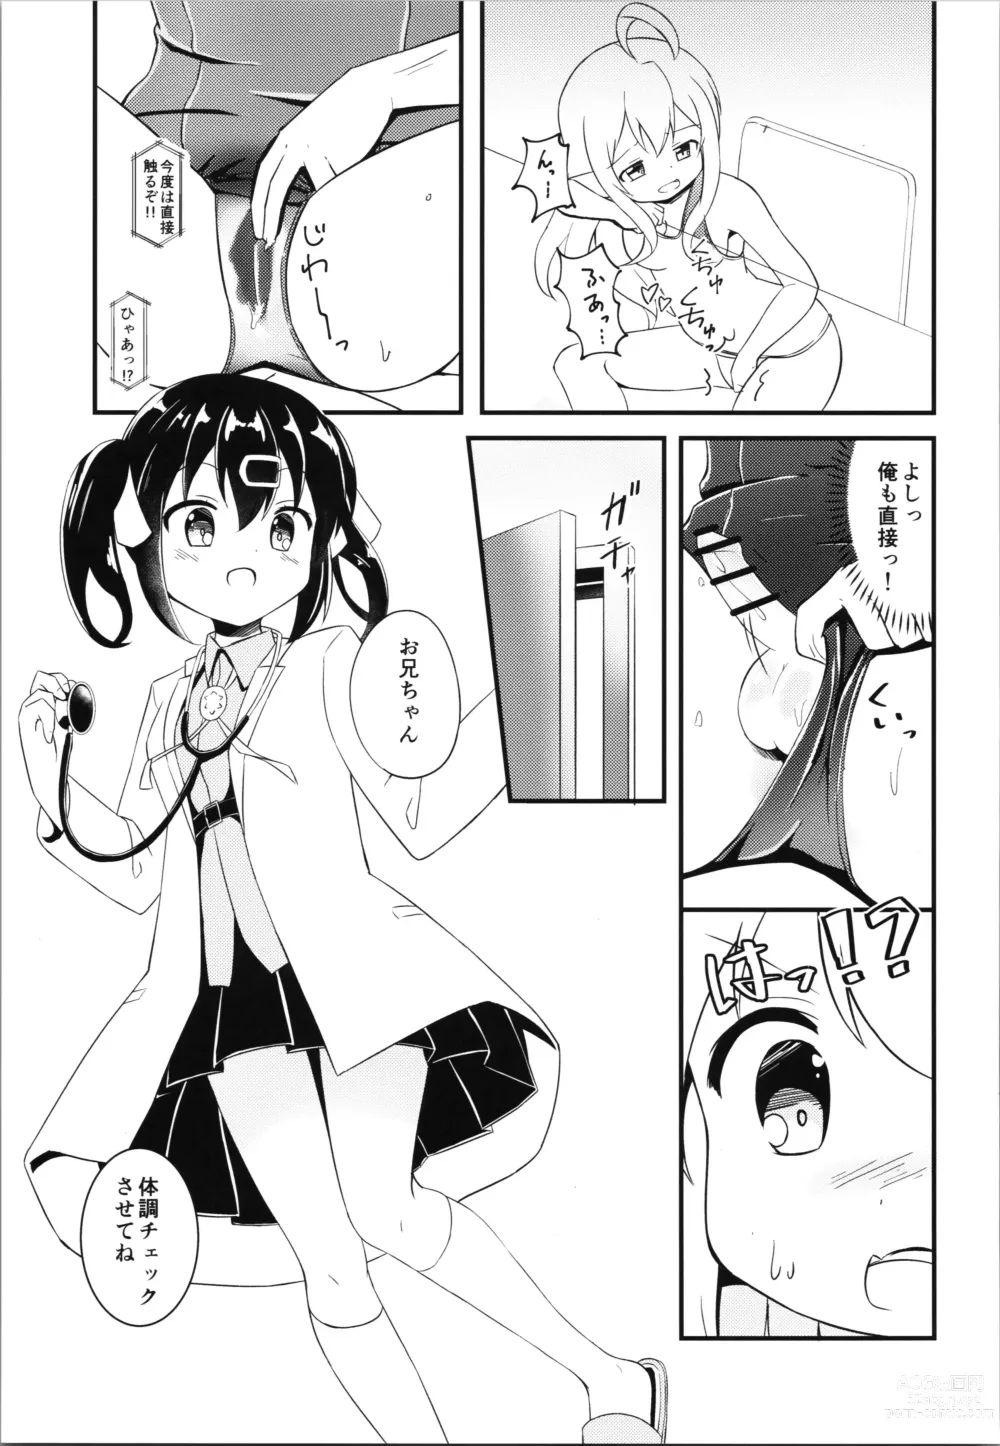 Page 5 of doujinshi Mahiro to Haete Kita ×××